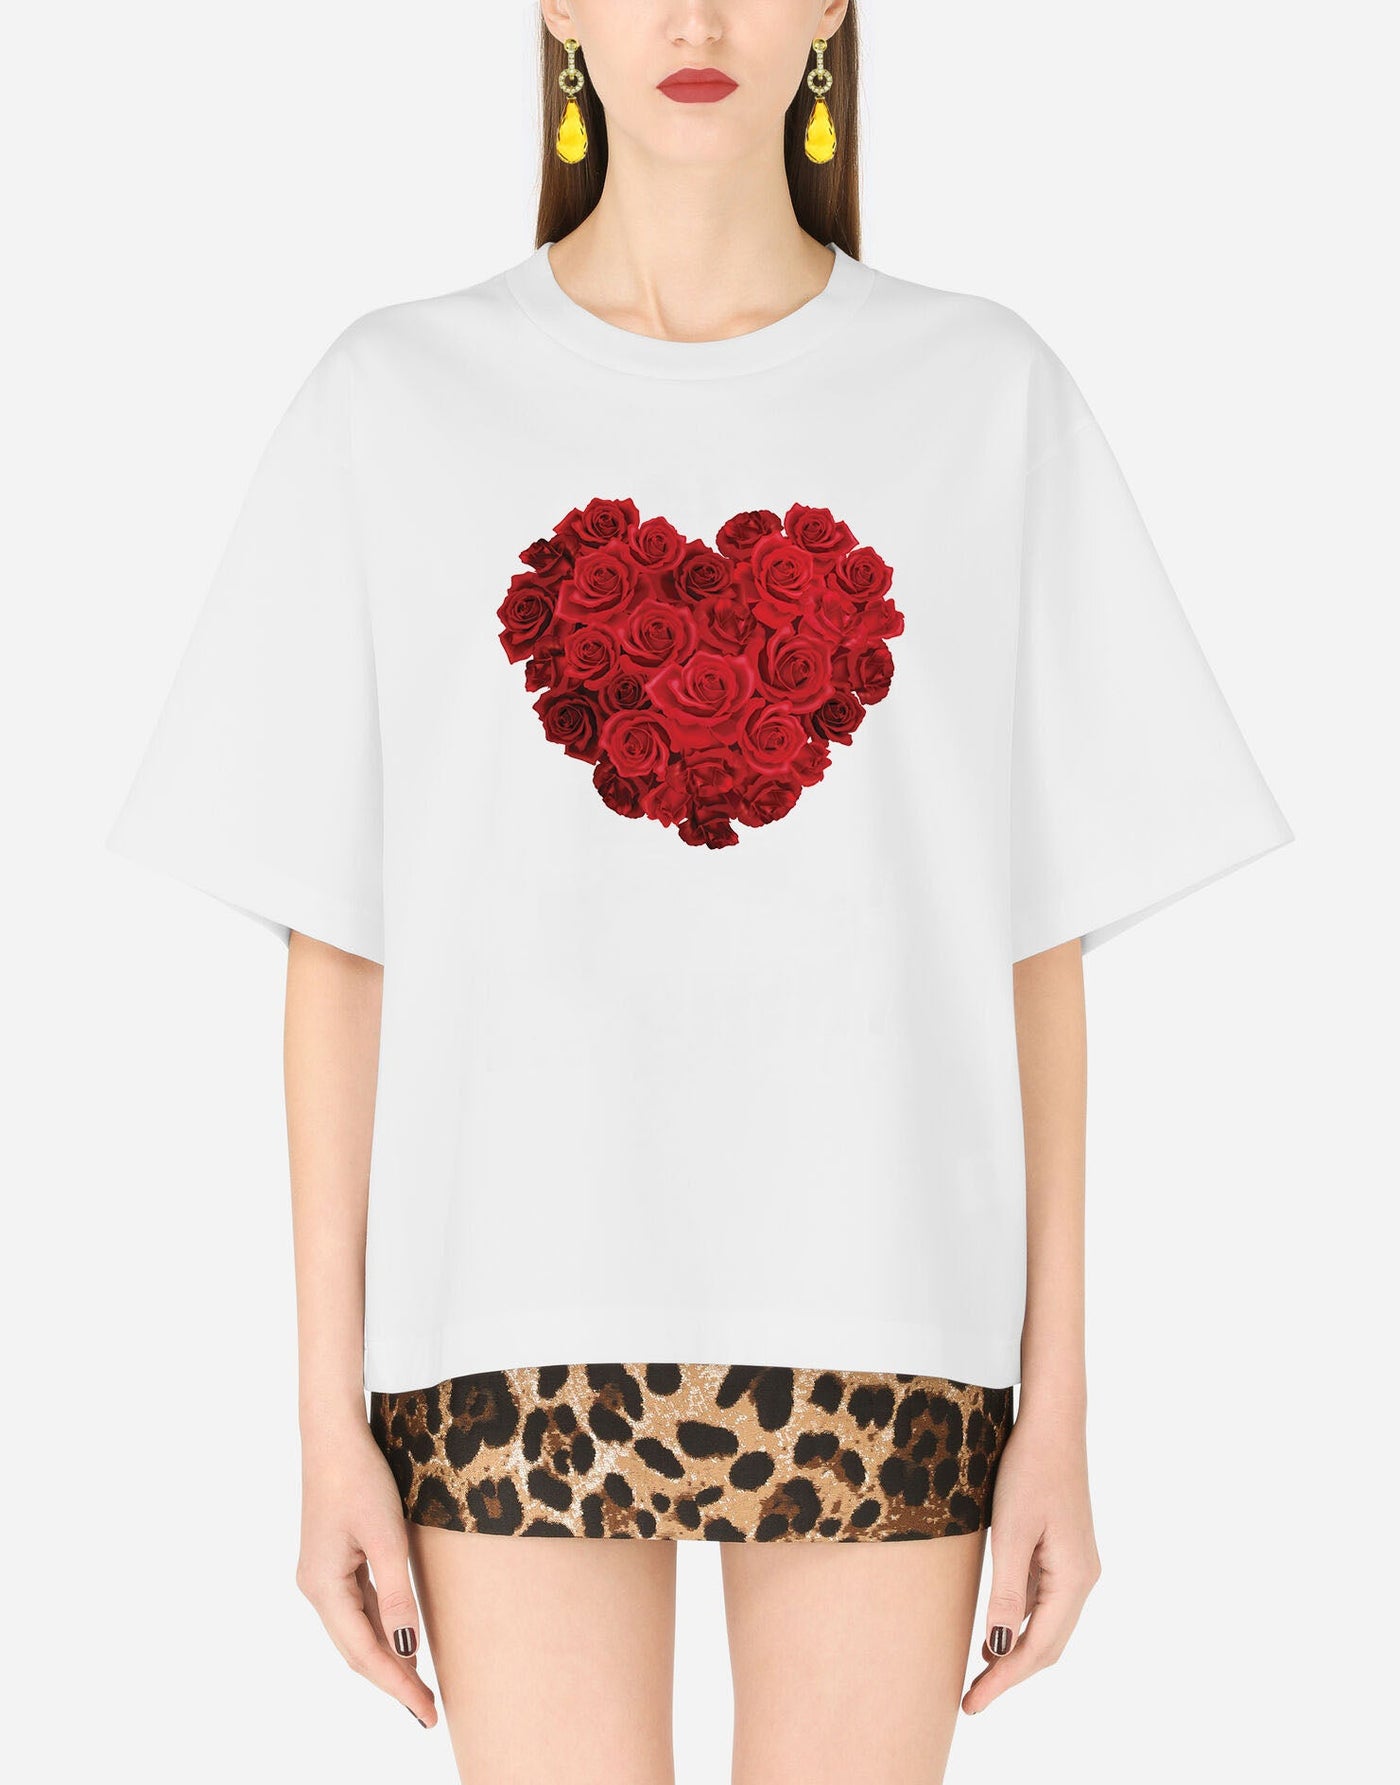 Roses Heart Valentine's Print on Premium T-shirt - EUG FASHION EugFashion 